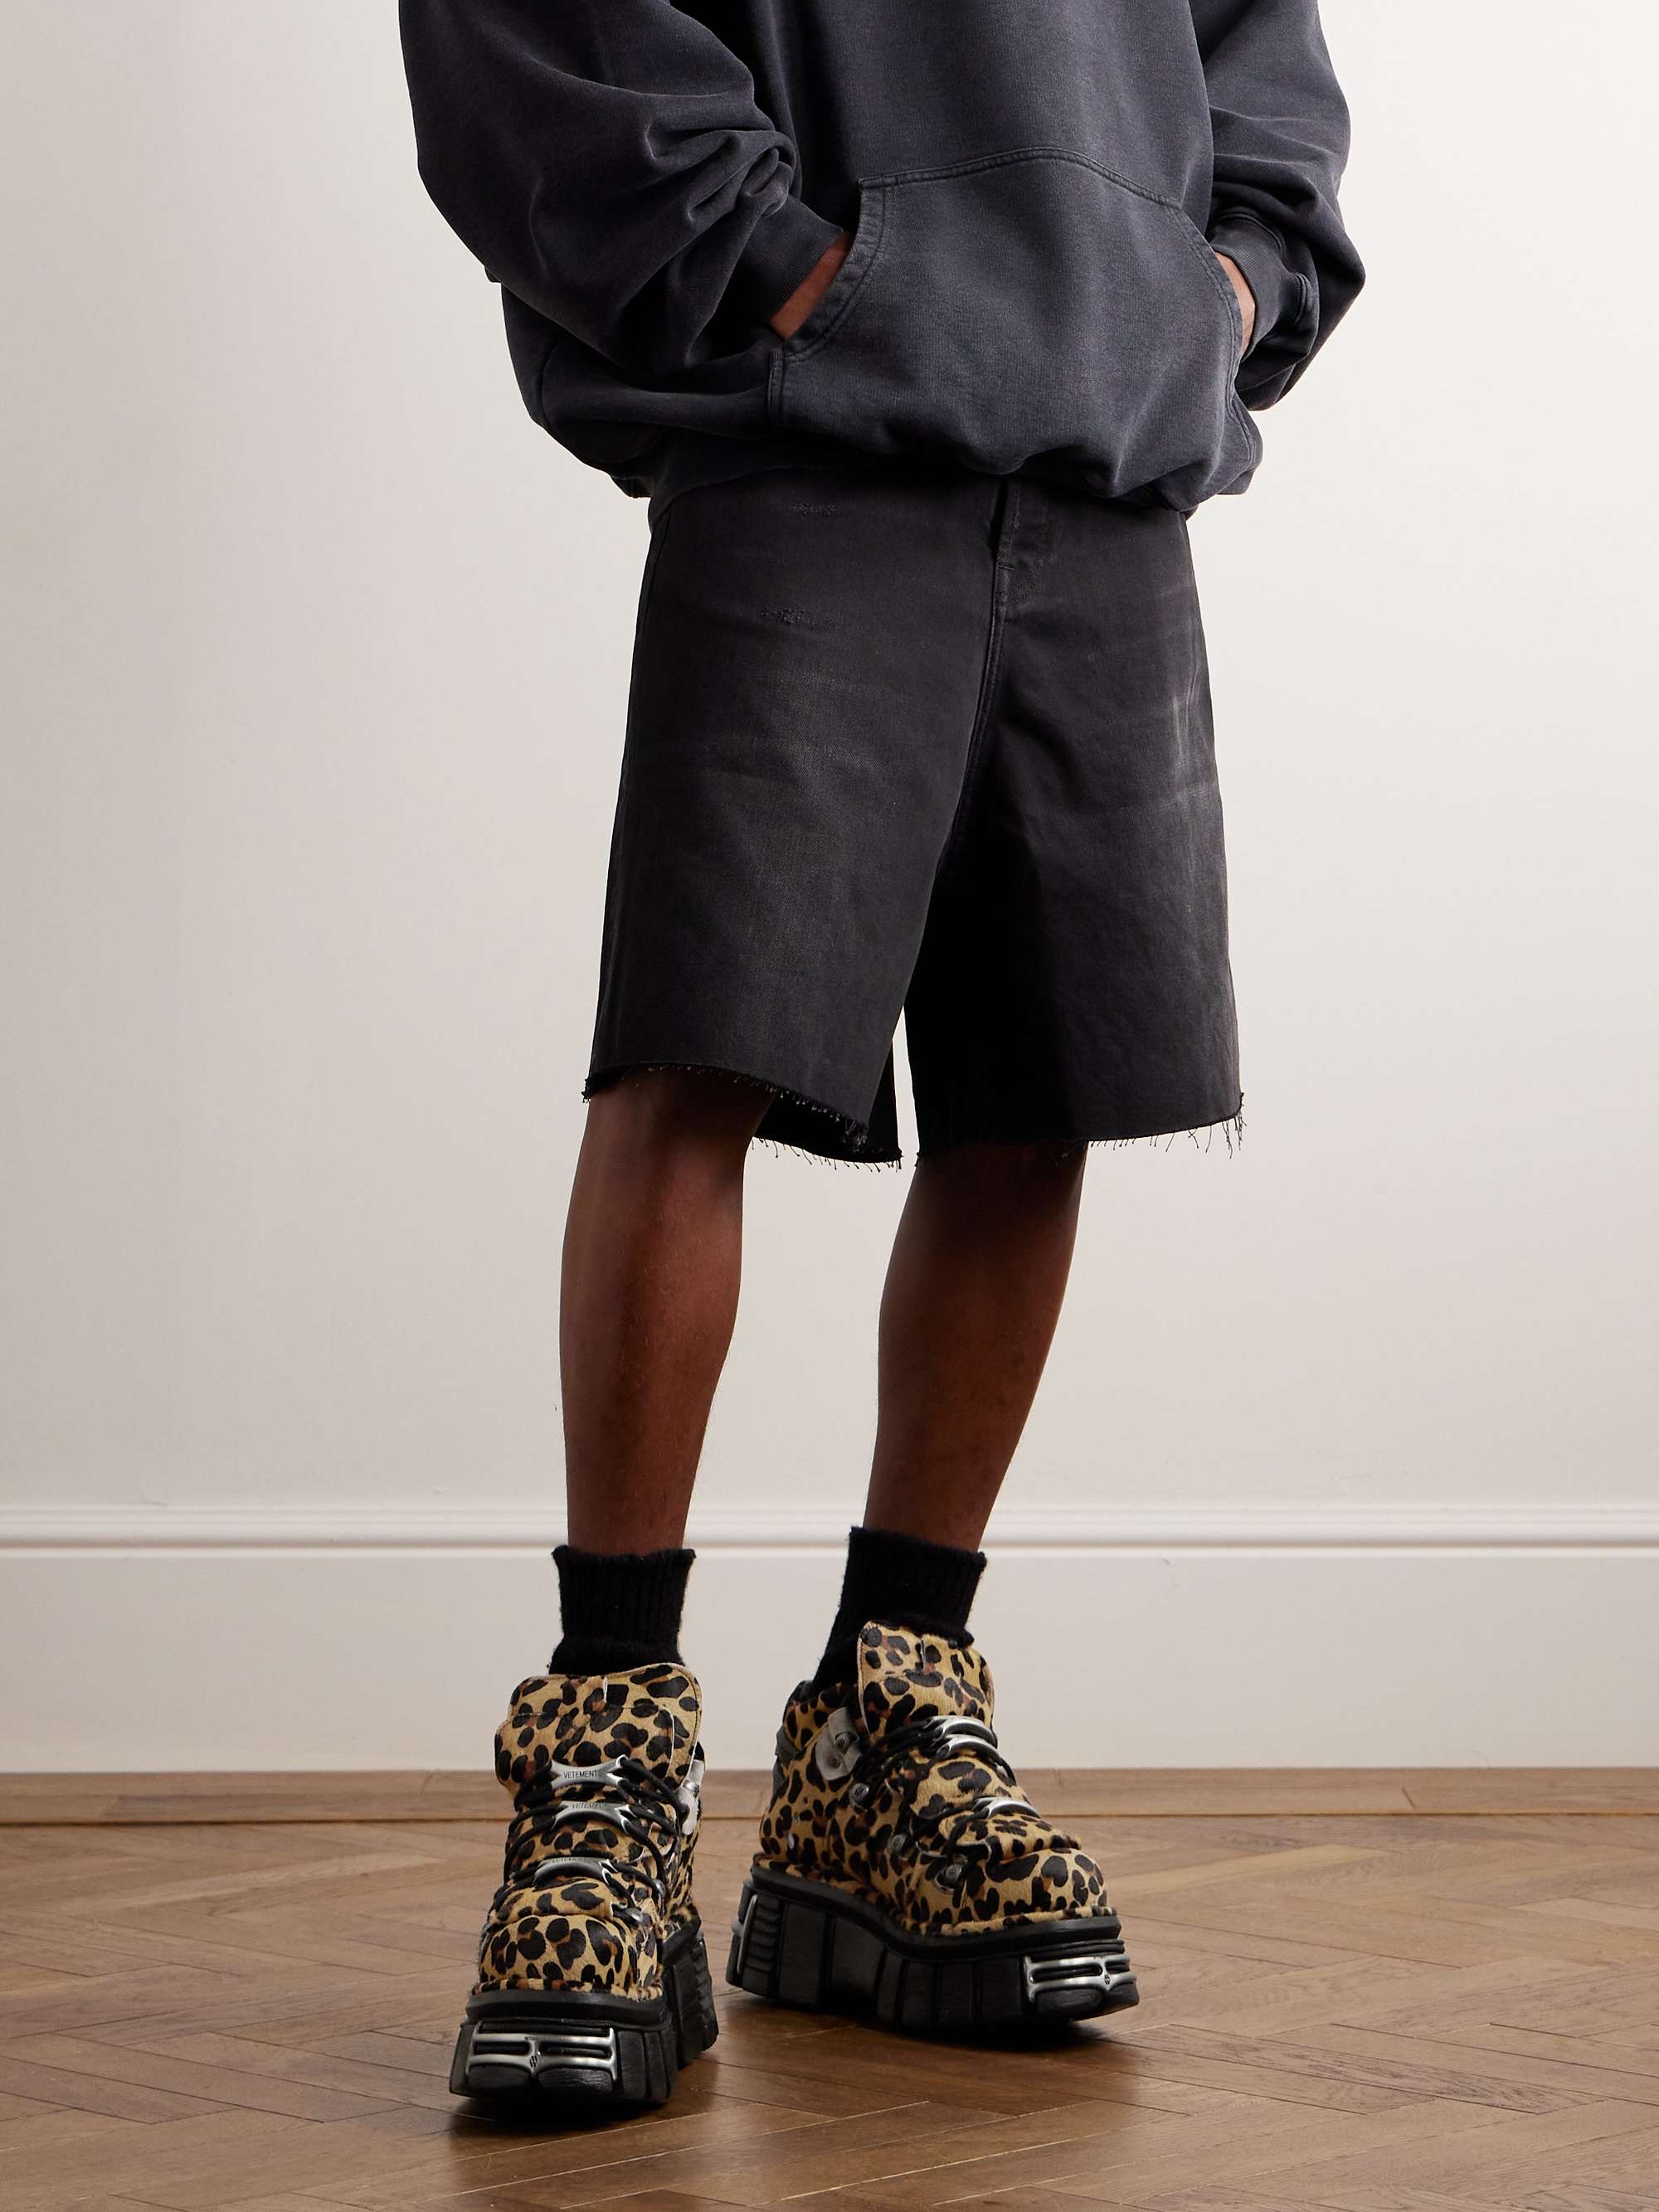 VETEMENTS + New Rock Embellished Leopard-Print Pony Hair Platform Sneakers  for Men